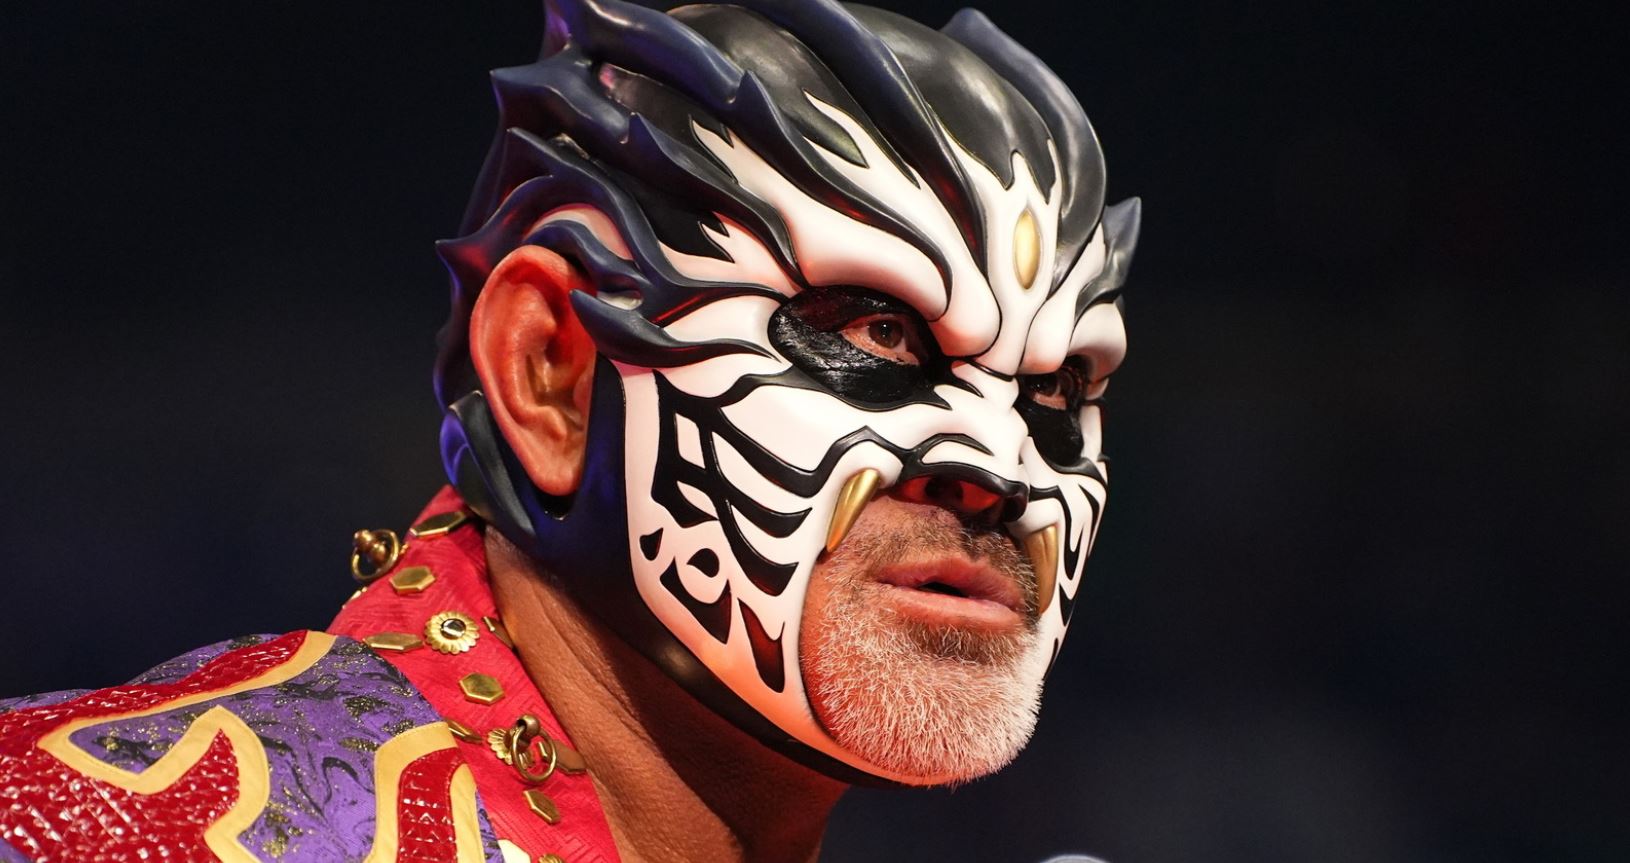 The Great Muta deve fazer parte do WWE Hall of Fame 2023